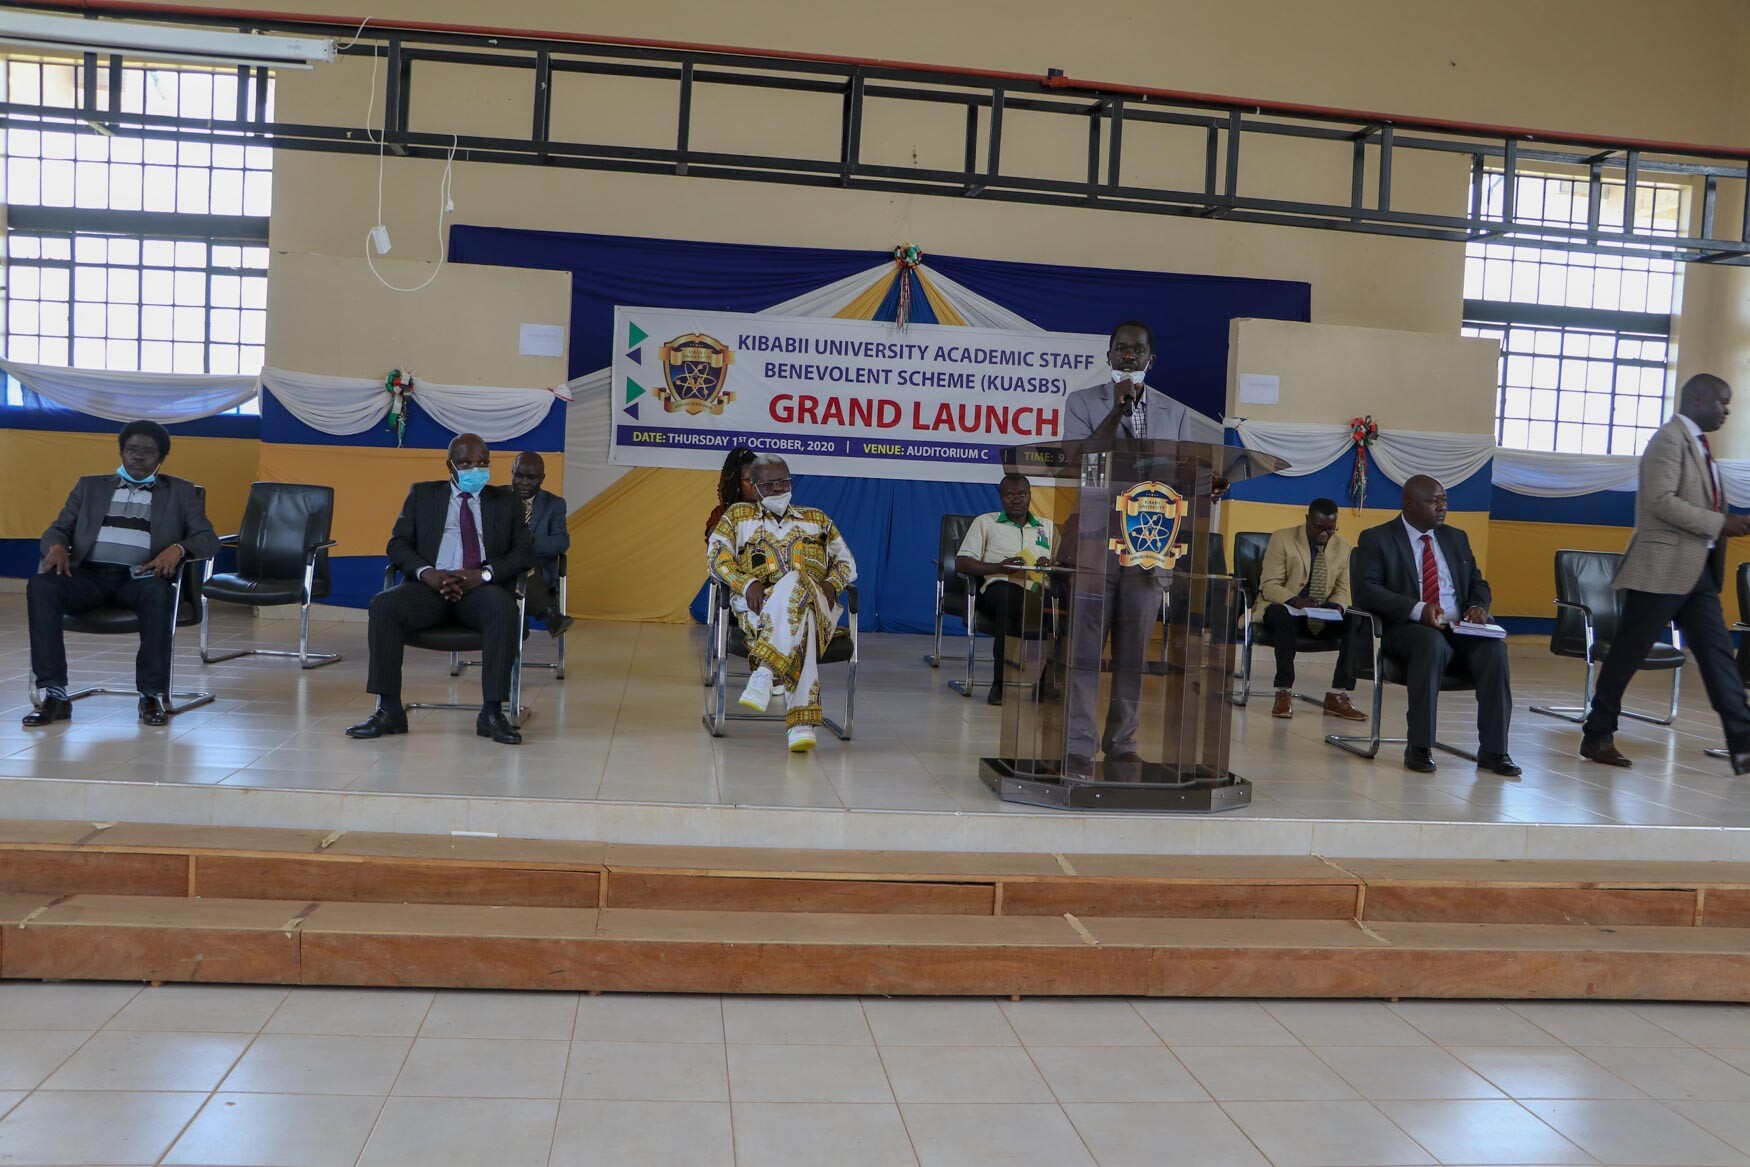 Academic Staff Benevolent Scheme (KUASBS) Grand Launch Album1